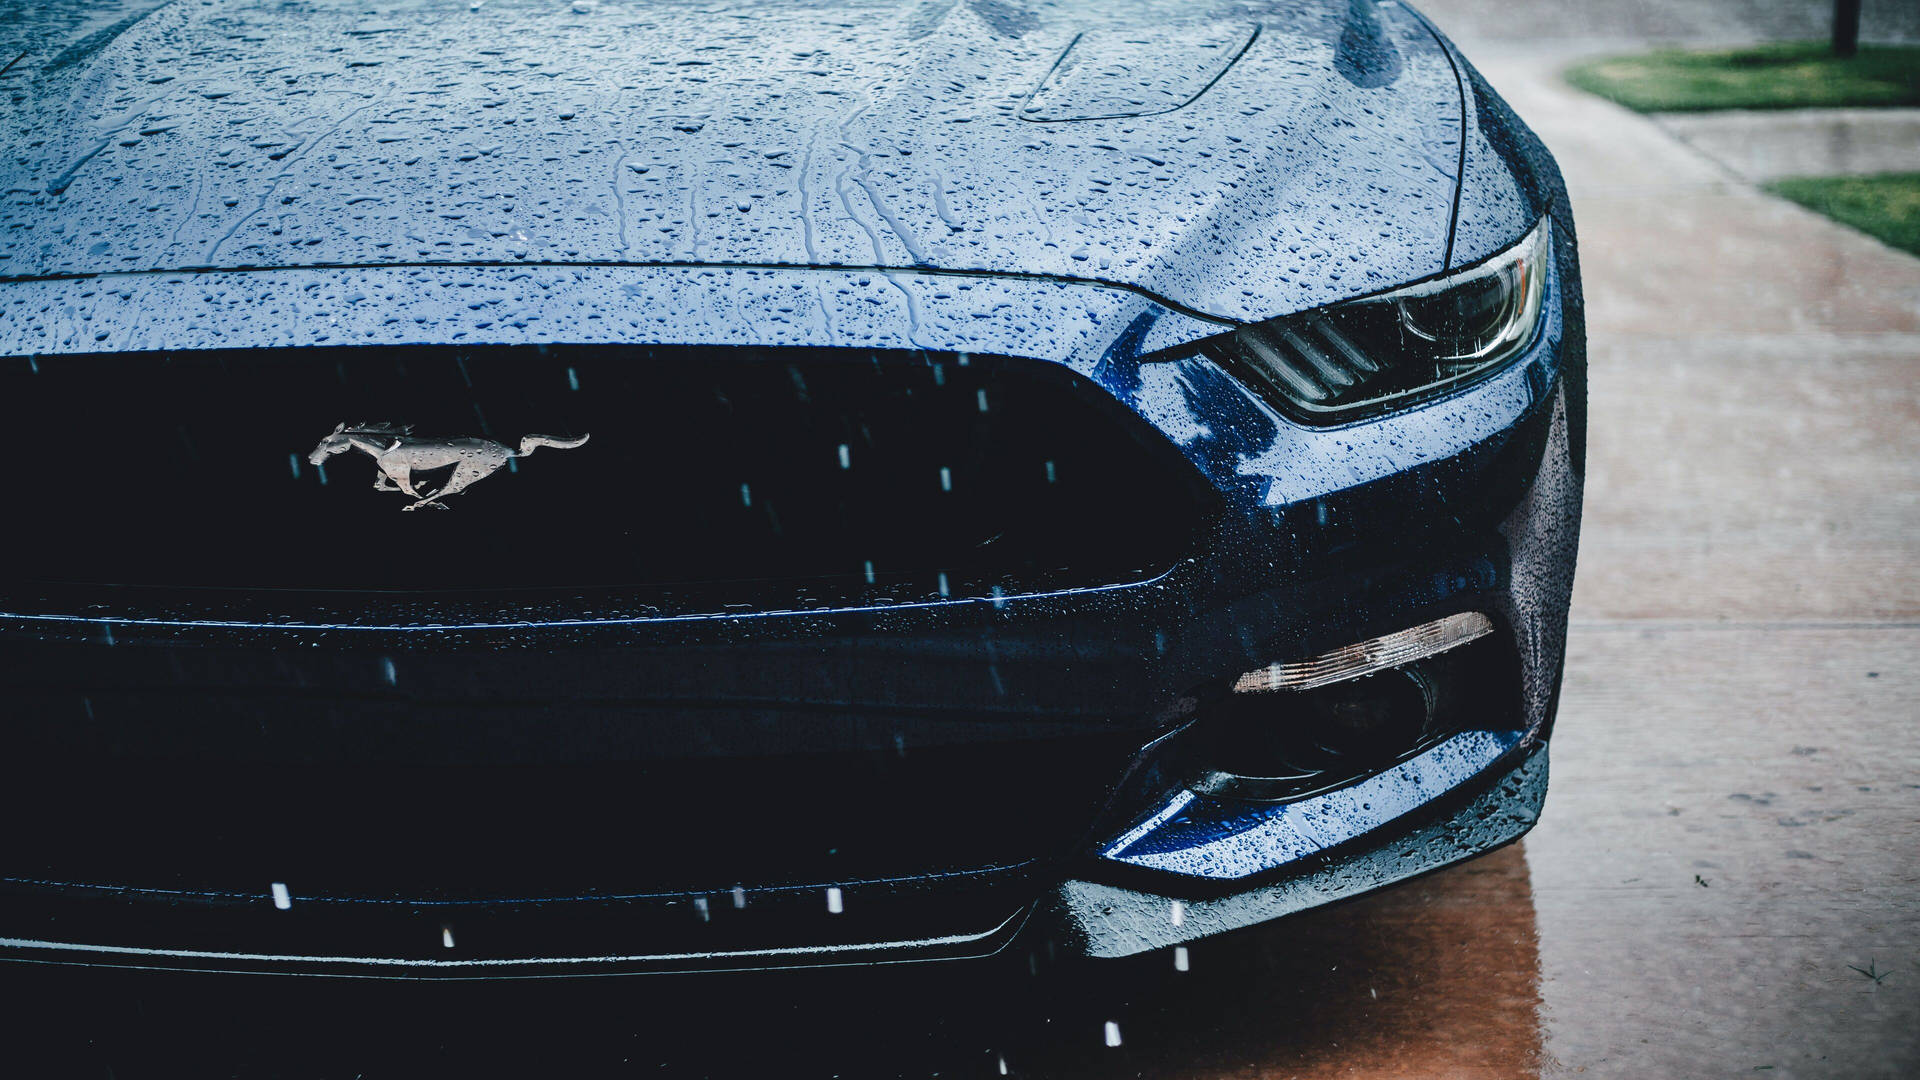 4K Ultra HD Mustang Front Bumper Wallpaper